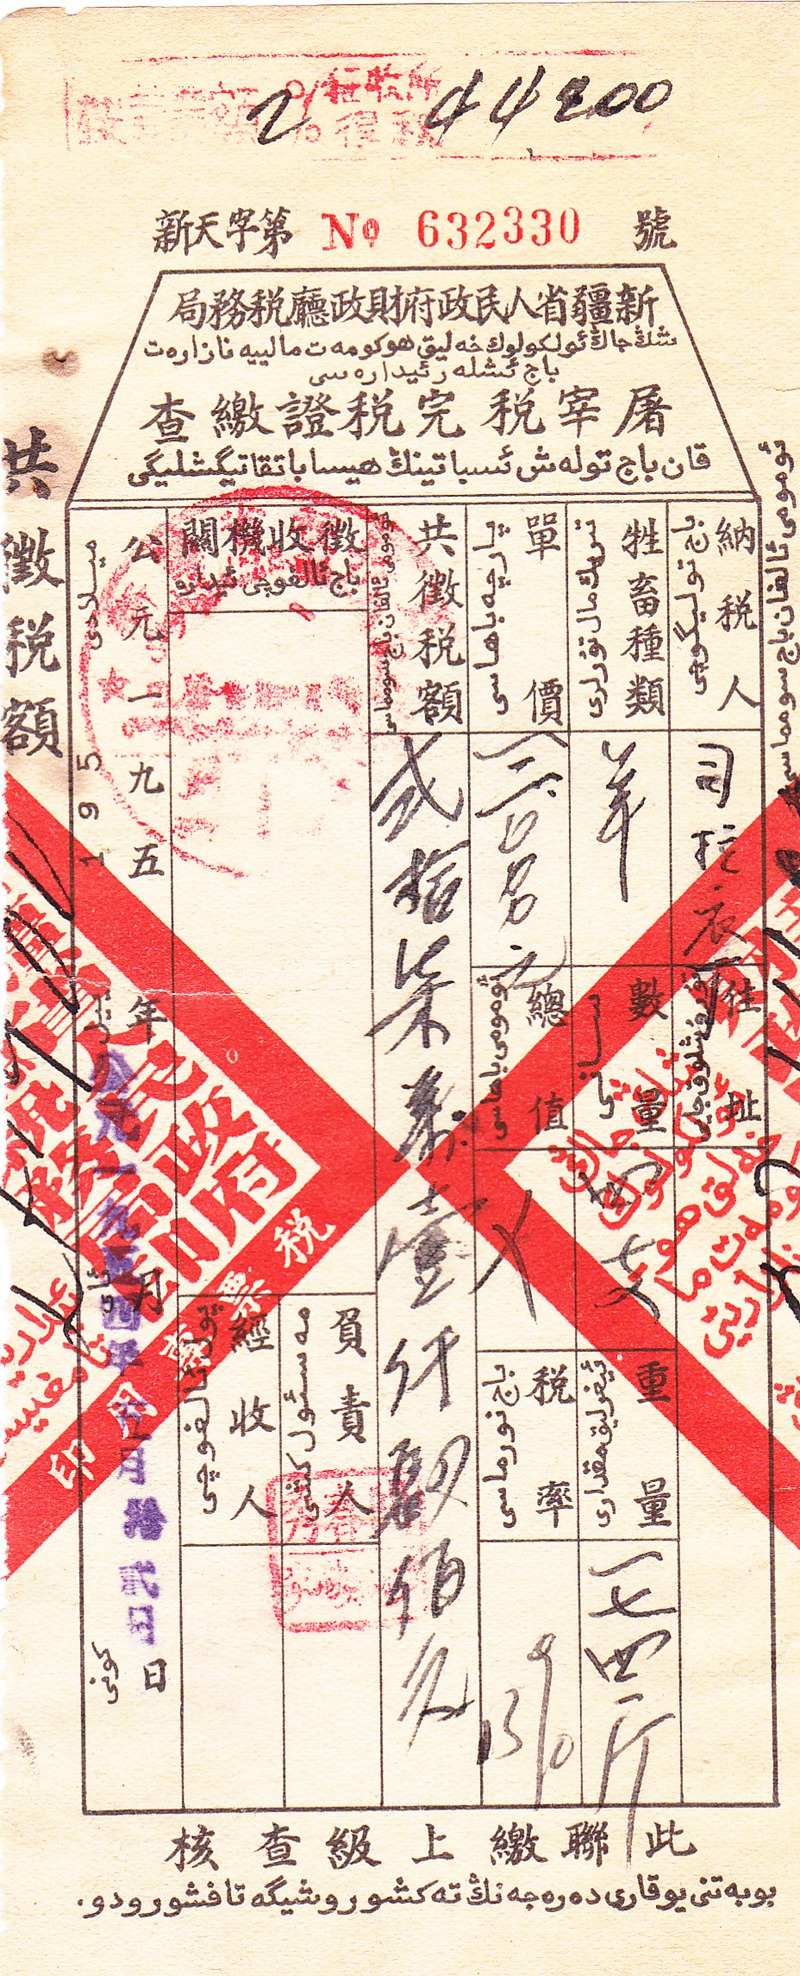 R2051, Revenue Stamp Sheet of Sinkiang (Xinjiang), 1950 for Four Sheets